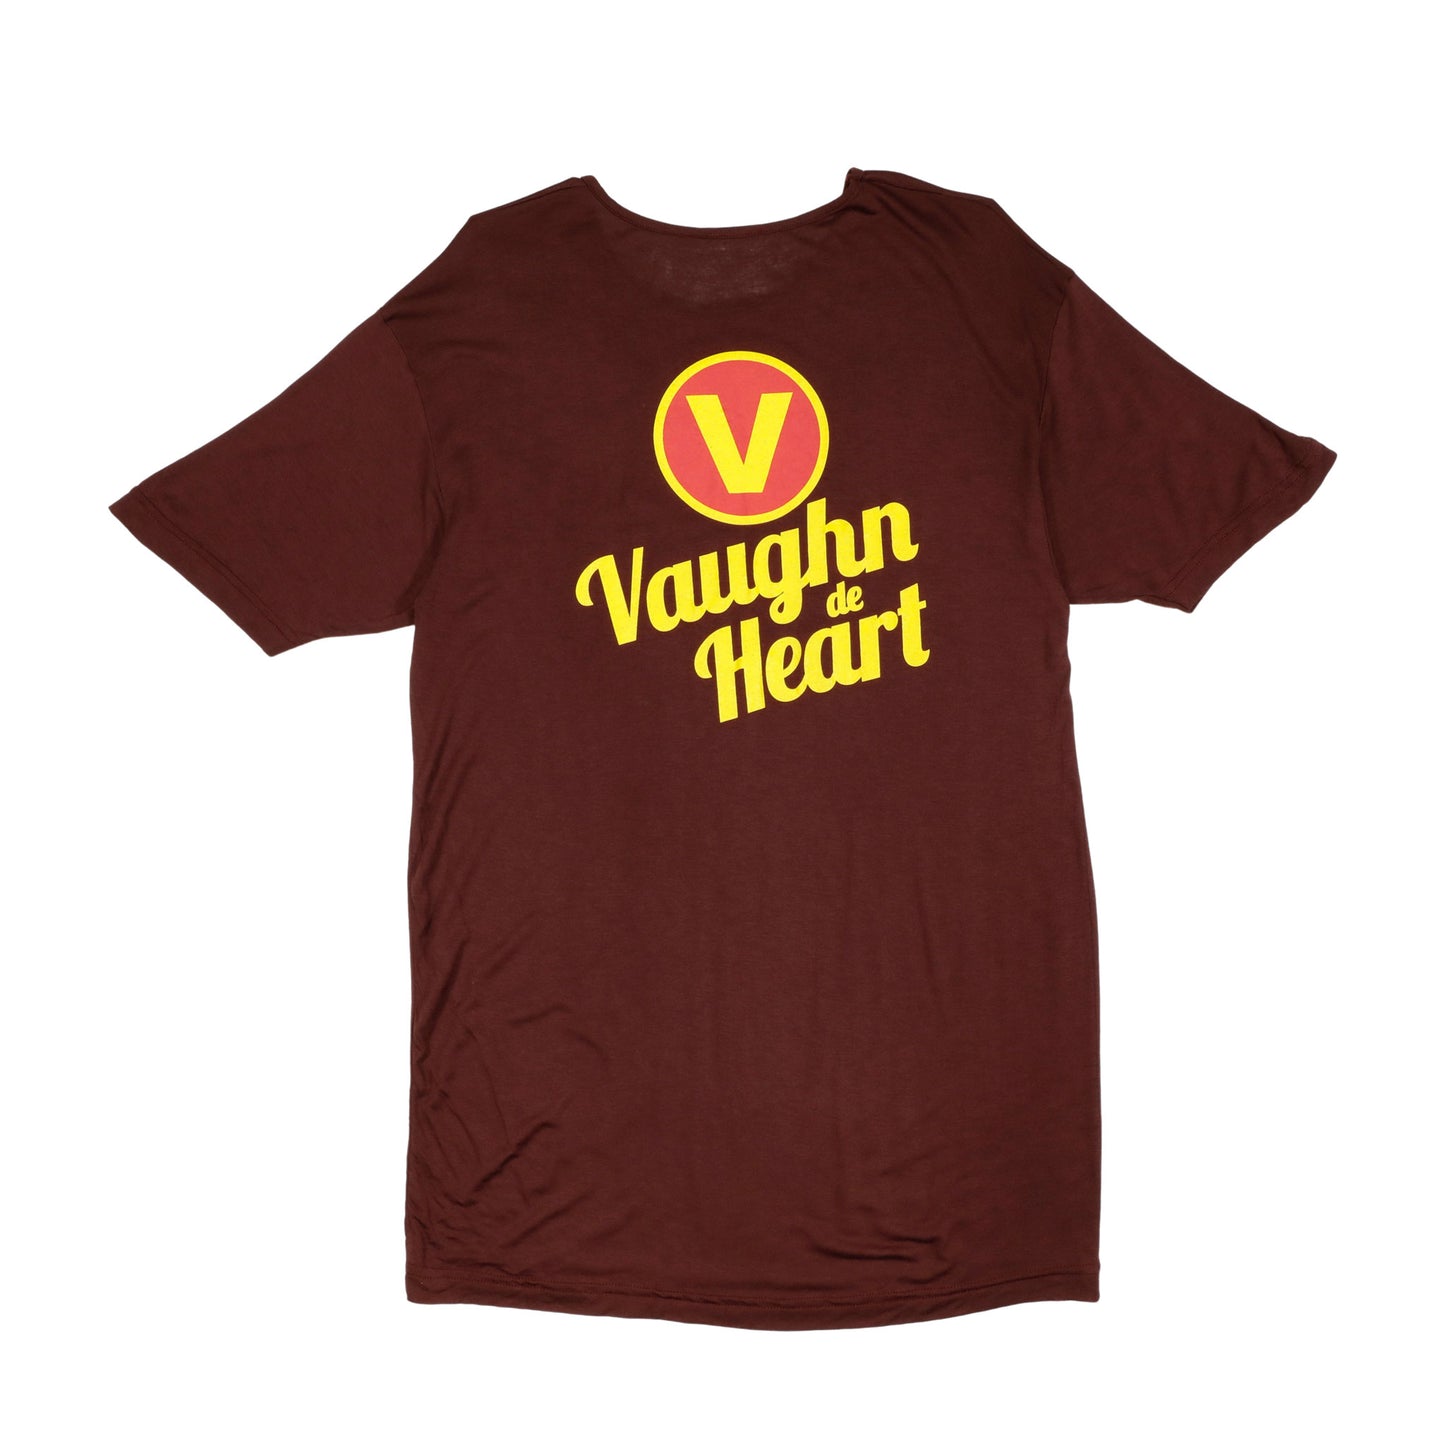 Men's Retro Logo Maroon Crew Neck T-Shirt-Vaughn de Heart